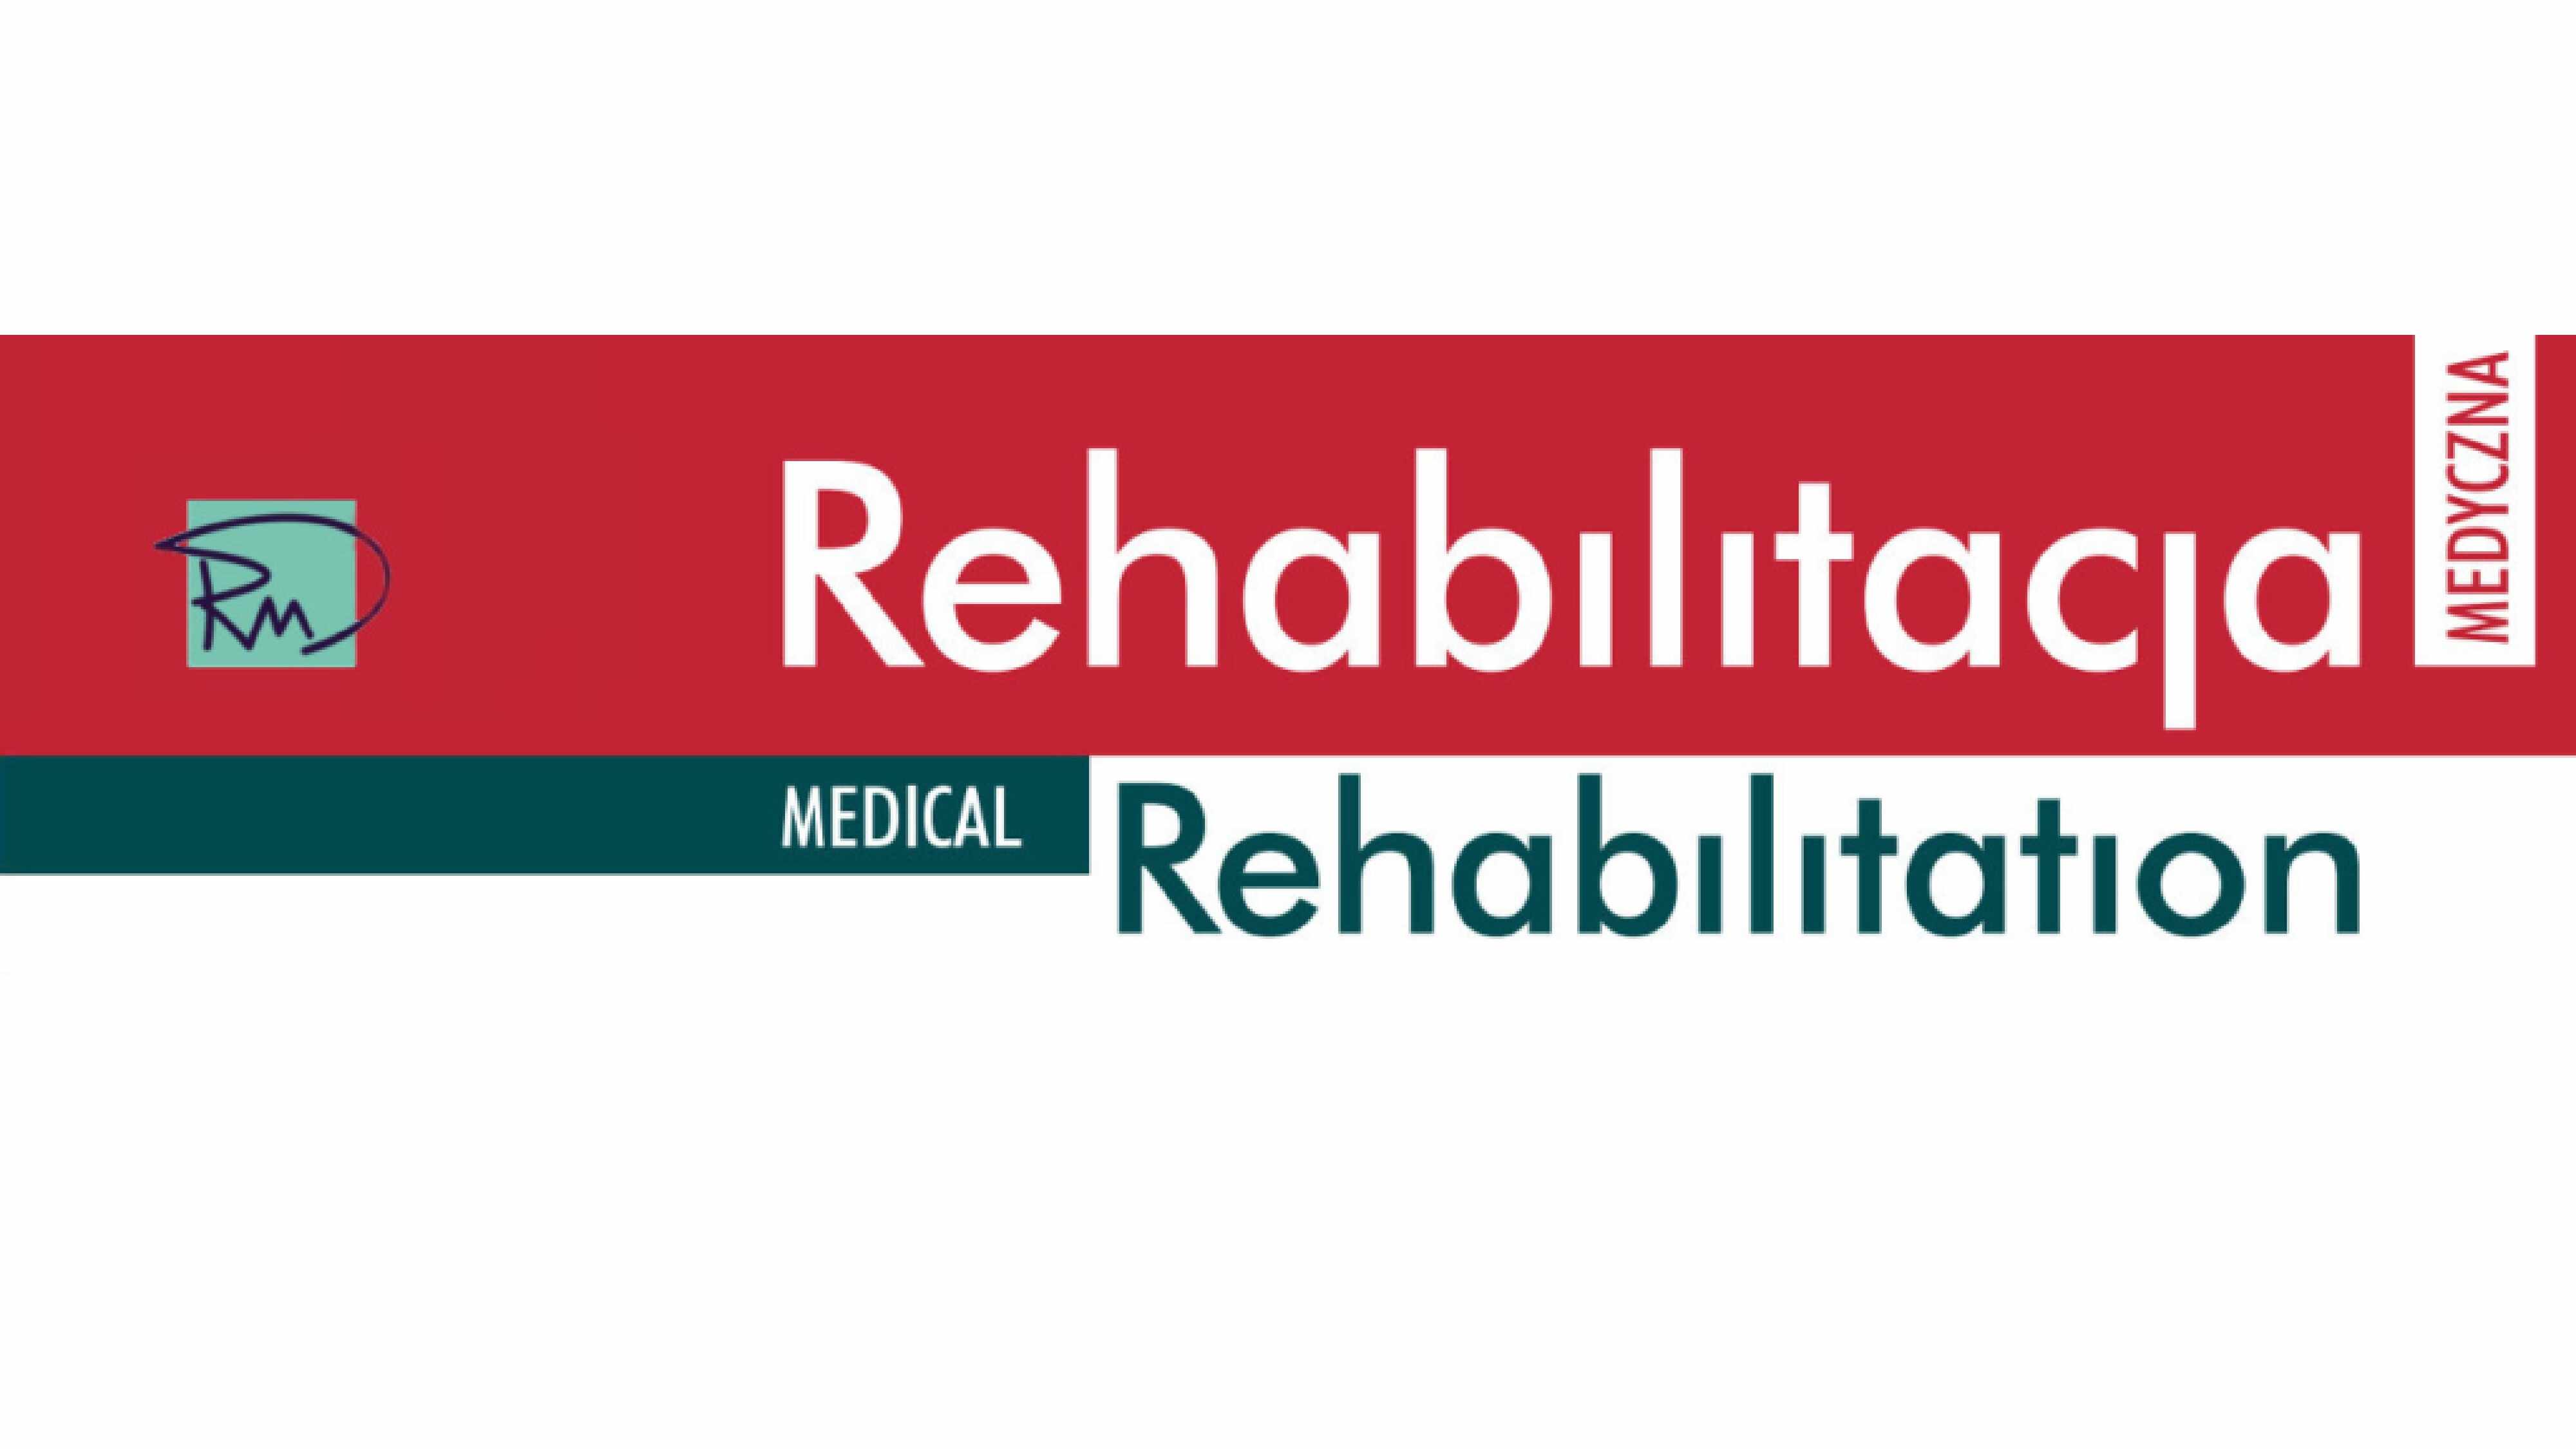 Medical Rehabilitation